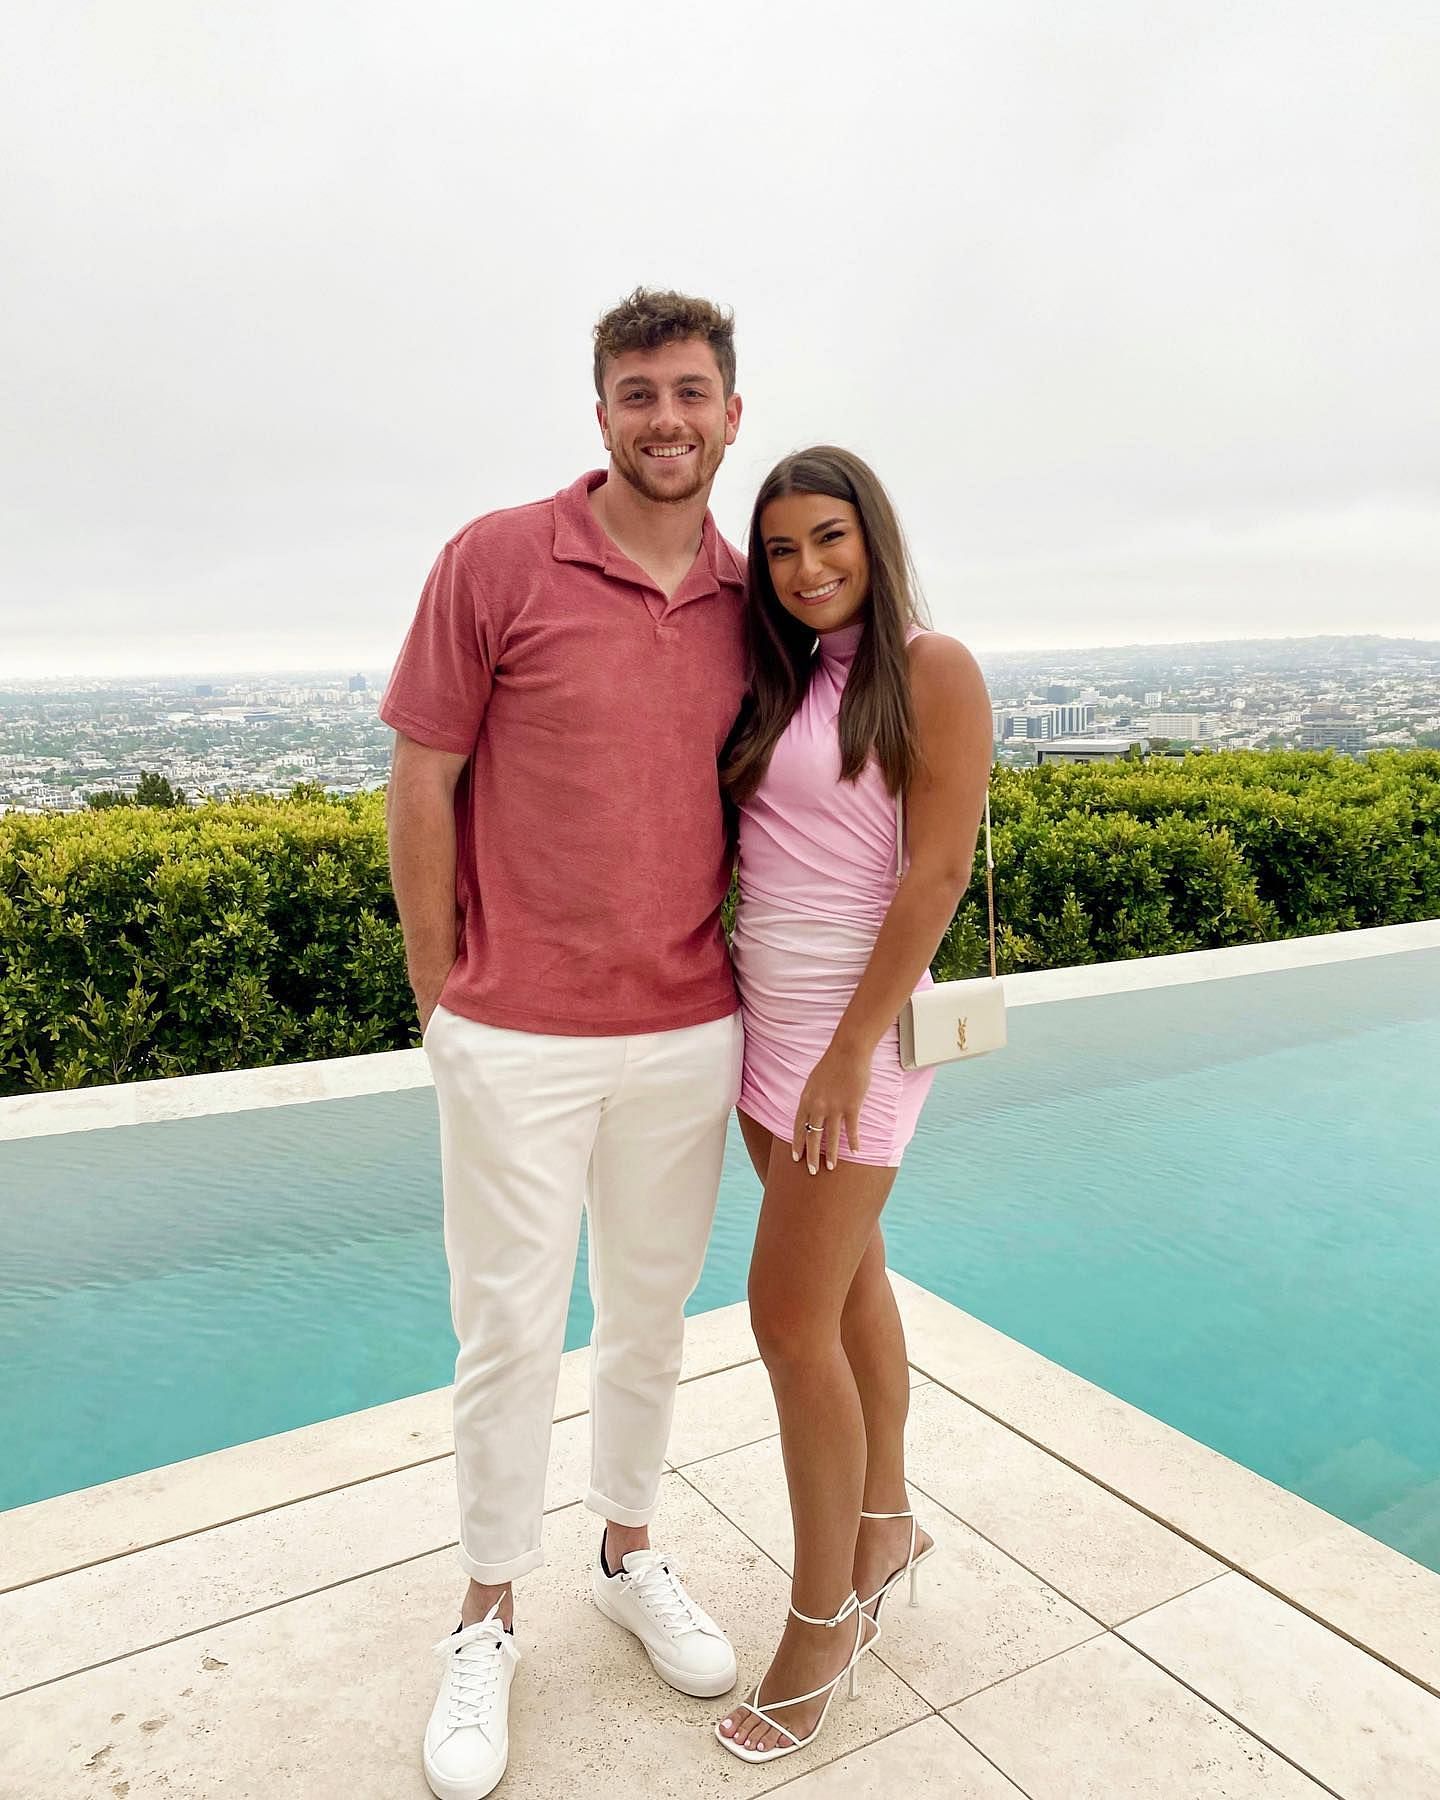 Green Bay rookie Sean Cifford and girlfriend Juliana Alessandroni - image via Instagram